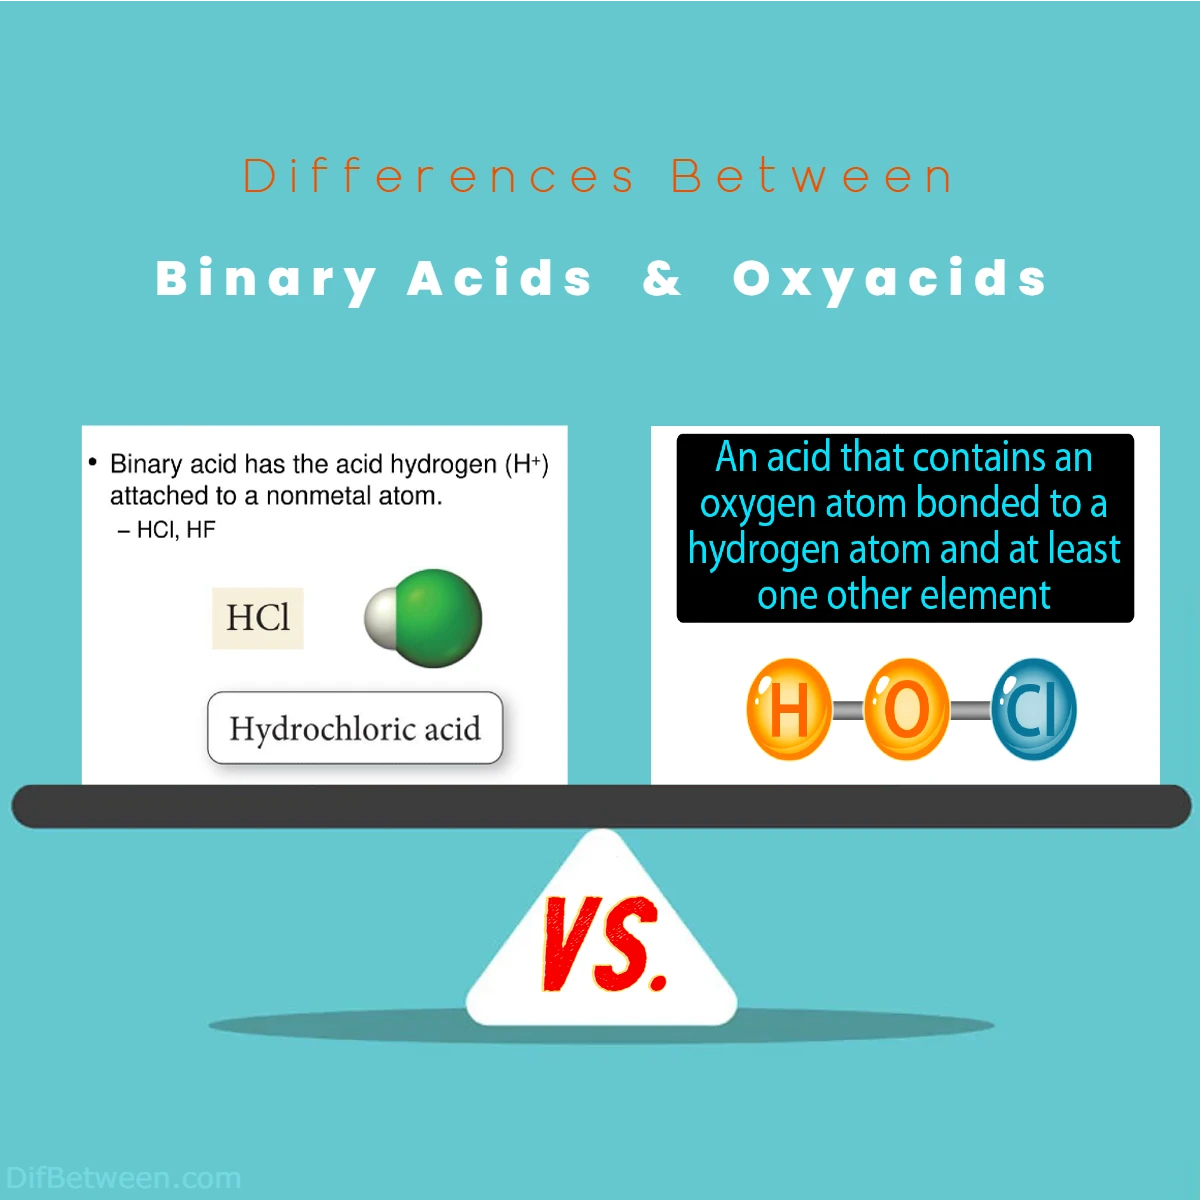 Differences Between Binary Acids vs Oxyacids